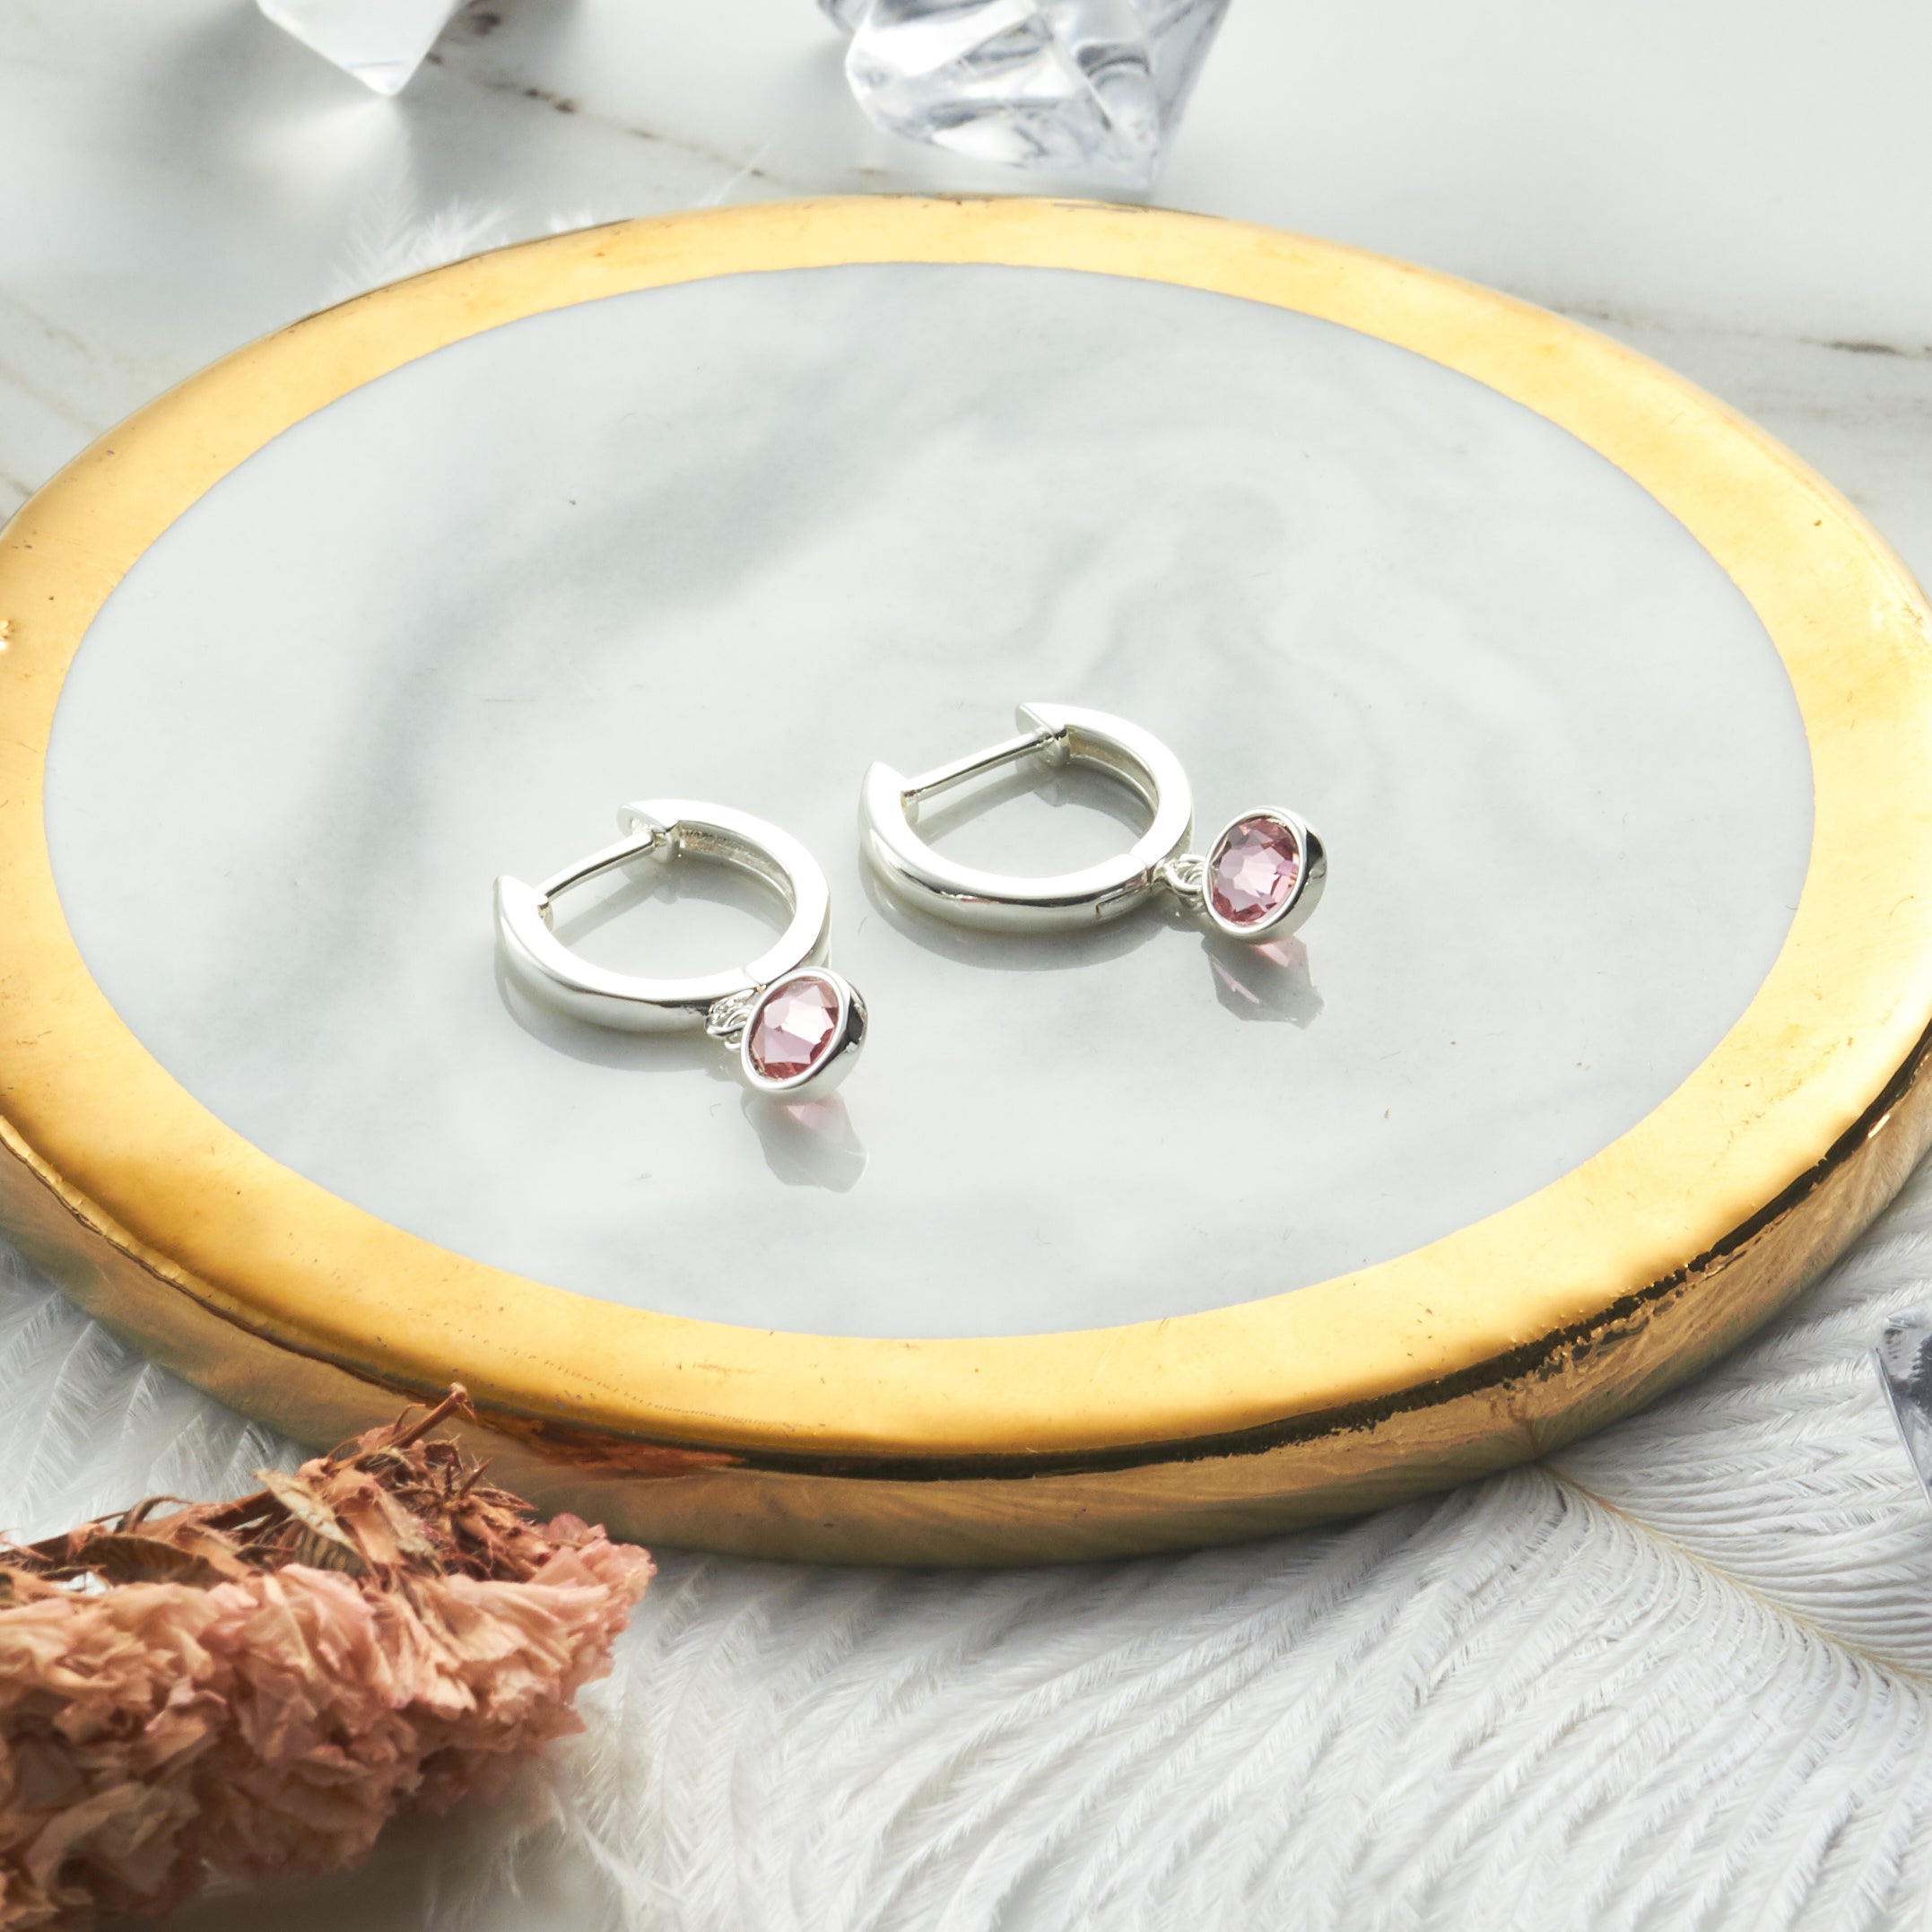 October Birthstone Hoop Earrings Created with Tourmaline Zircondia® Crystals